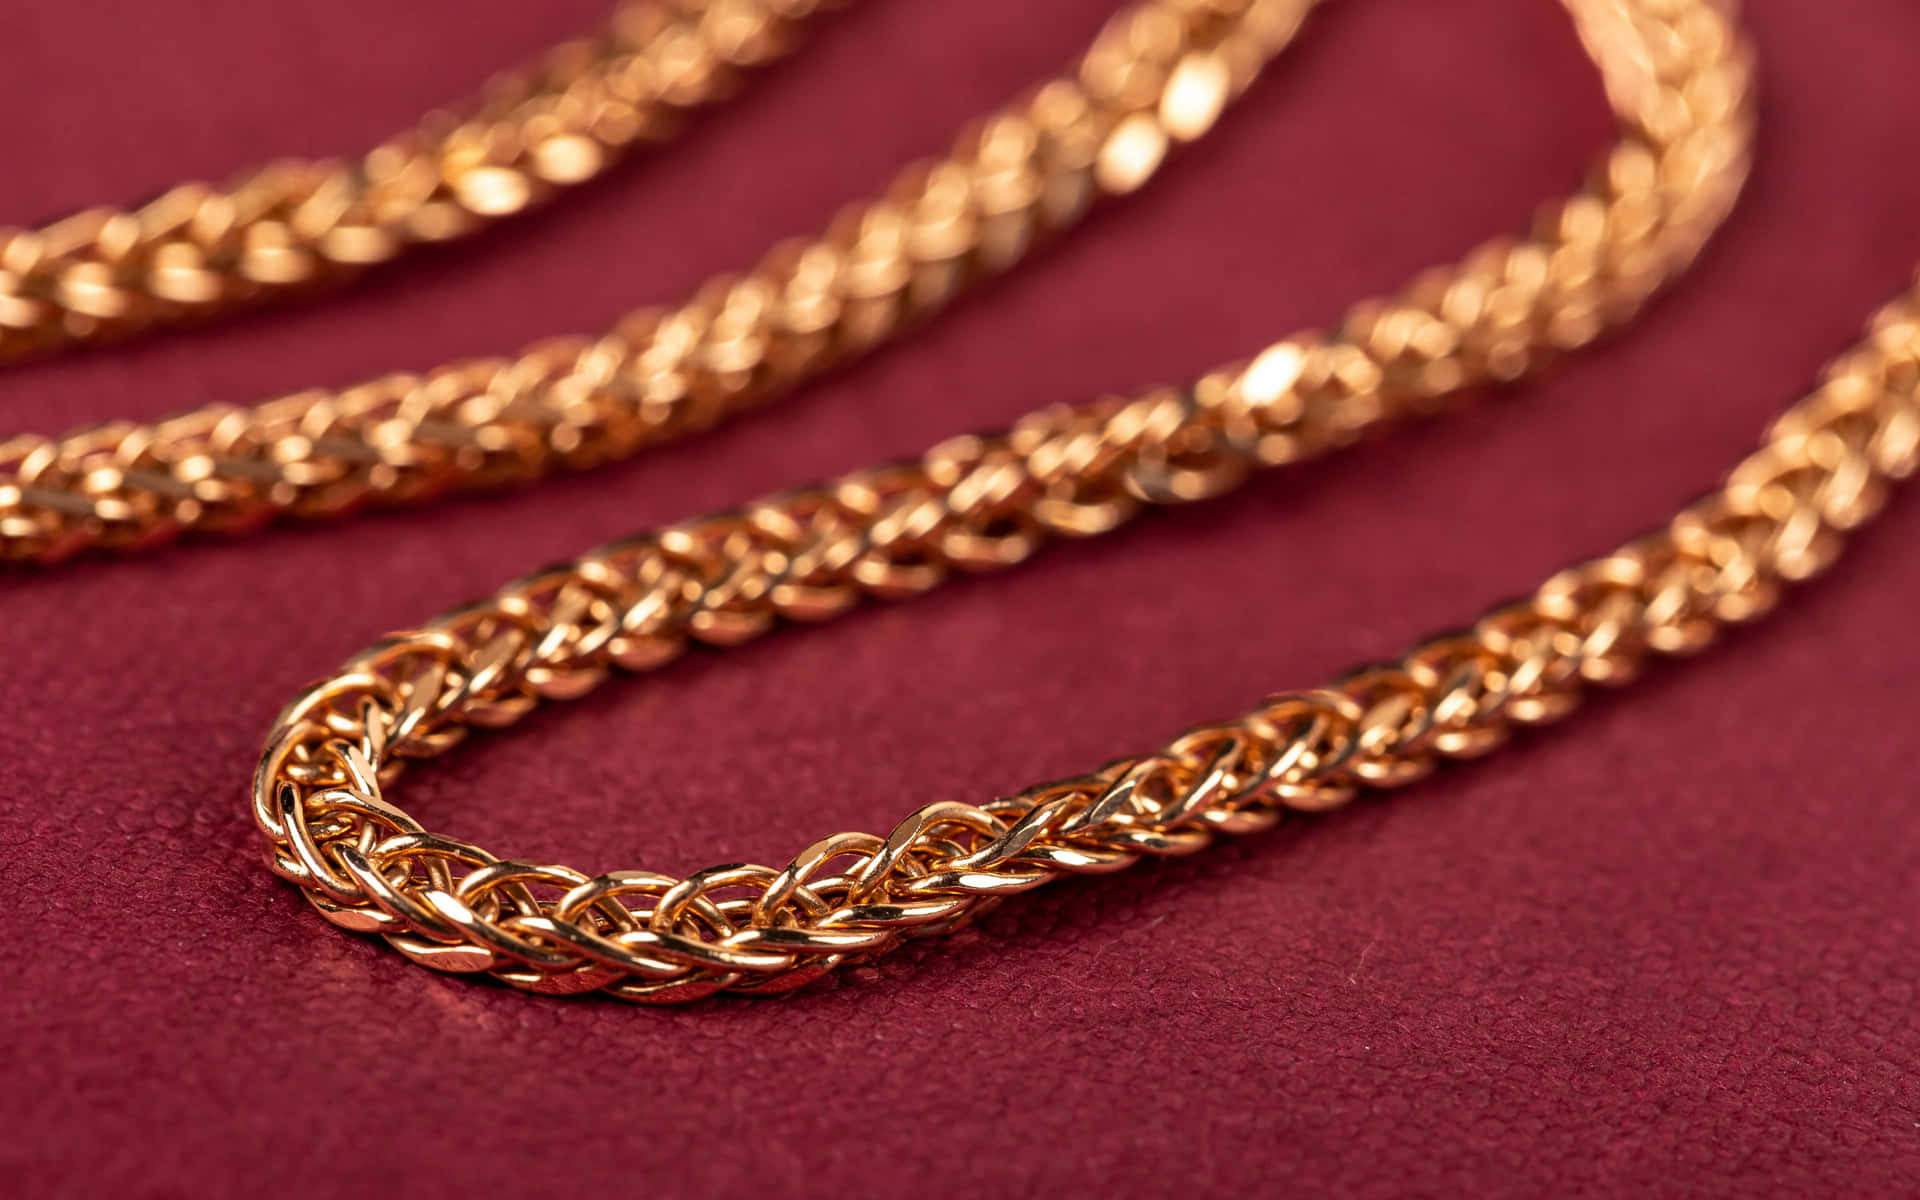 Classy Gold Chain Wallpaper